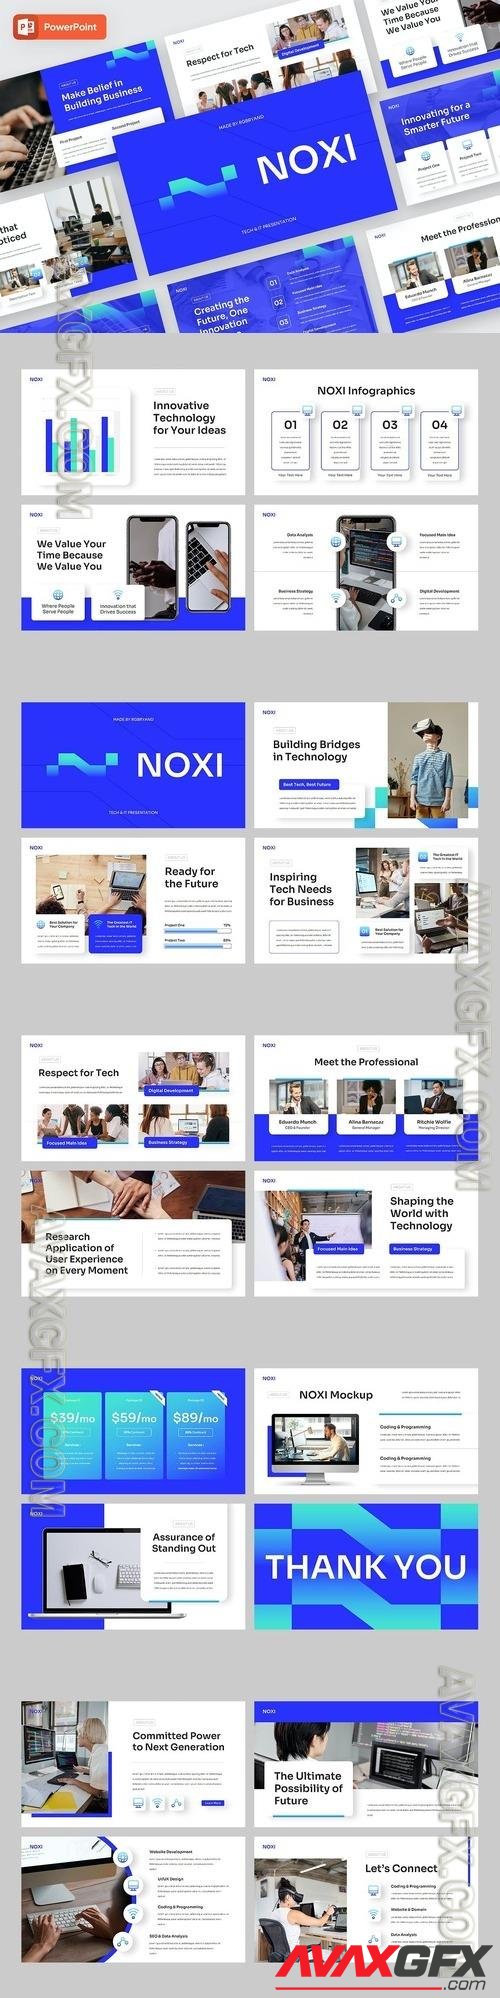 Noxi - Technology/Startup Powerpoint